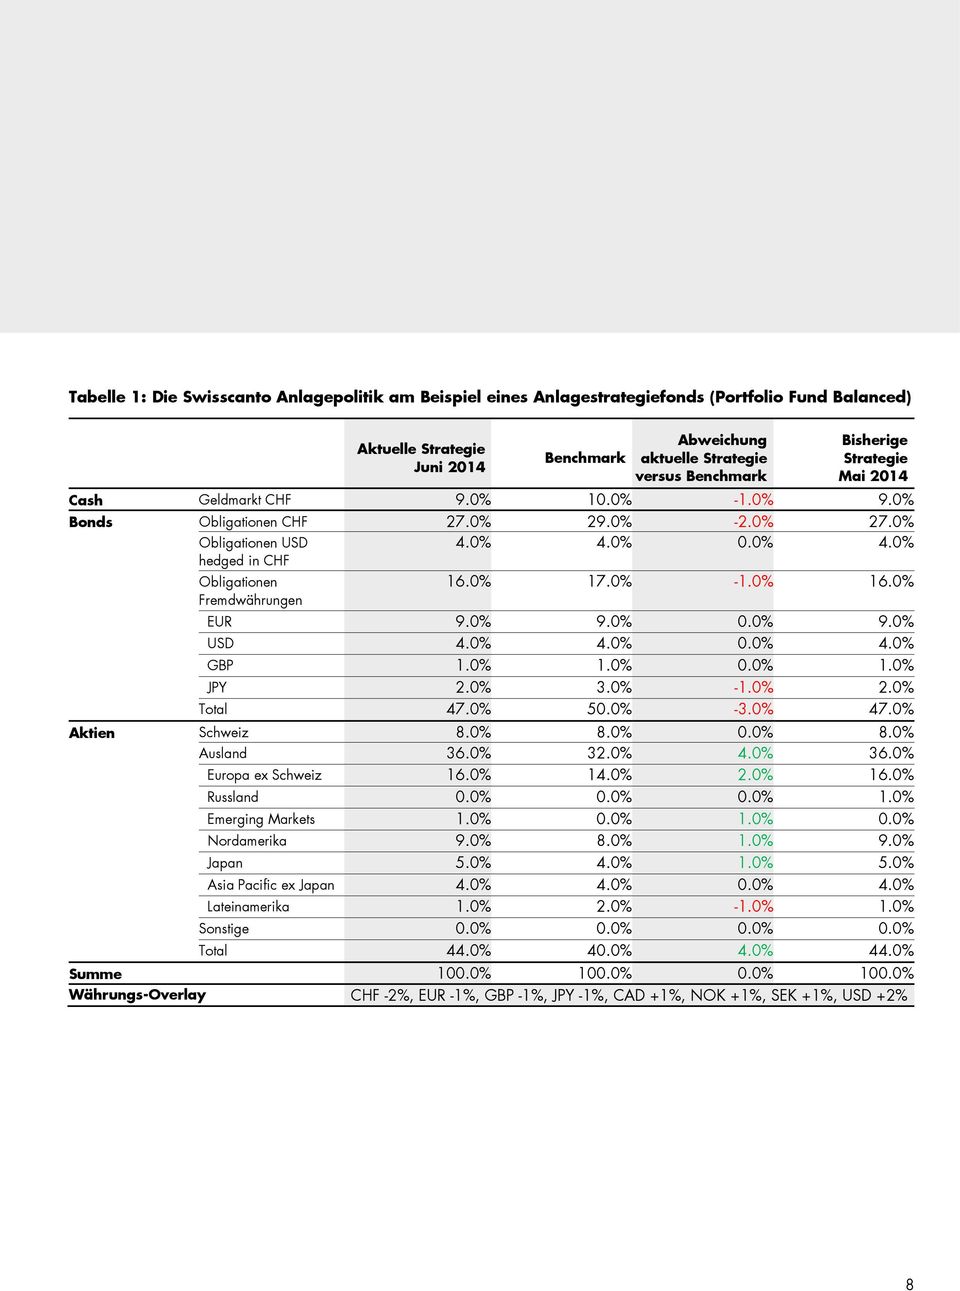 0% EUR 9.0% 9.0% 0.0% 9.0% USD 4.0% 4.0% 0.0% 4.0% GBP 1.0% 1.0% 0.0% 1.0% JPY.0% 3.0% -1.0%.0% Total 47.0% 50.0% -3.0% 47.0% Aktien Schweiz 8.0% 8.0% 0.0% 8.0% Ausland 36.0% 3.0% 4.0% 36.